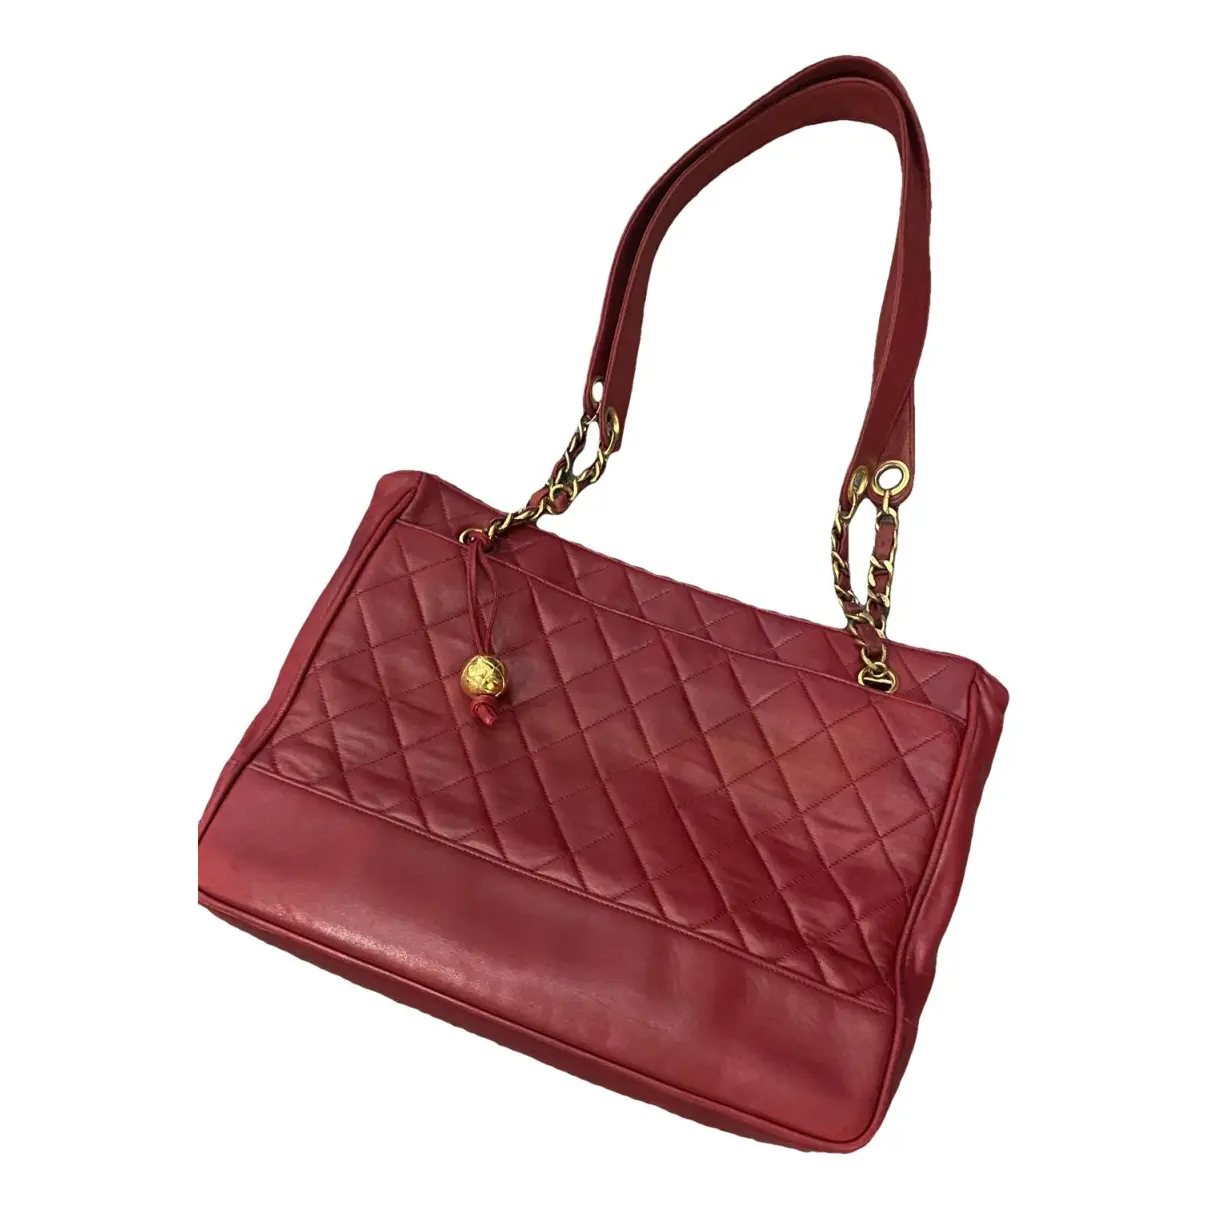 Paris-Biarritz leather handbag